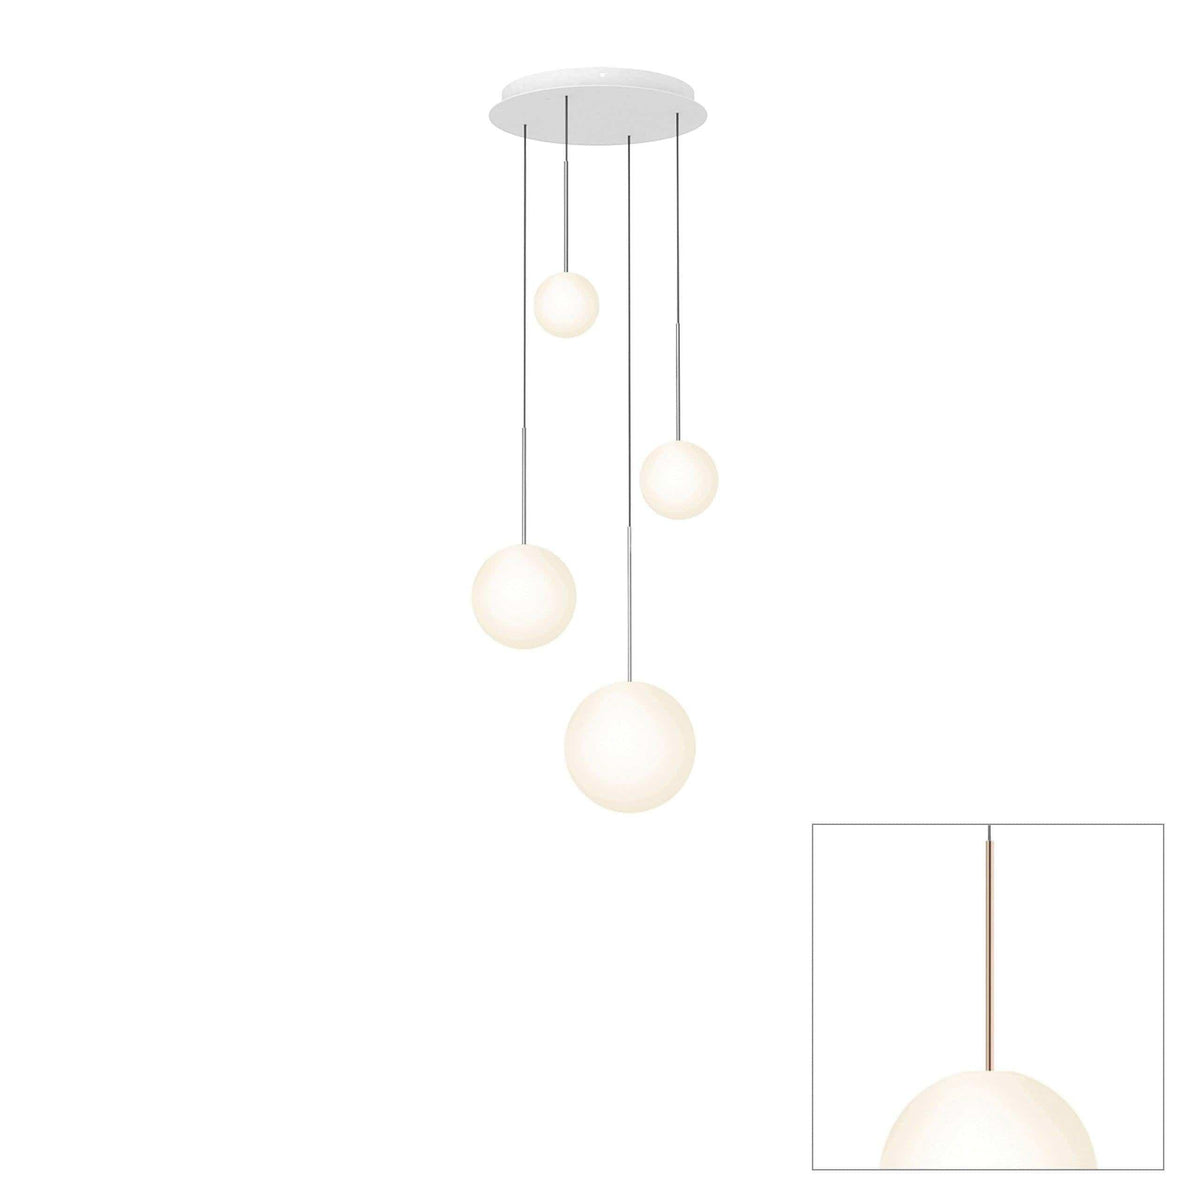 Pablo Designs - Bola Sphere Chandelier - BOLA SPH 56810 RG | Montreal Lighting & Hardware